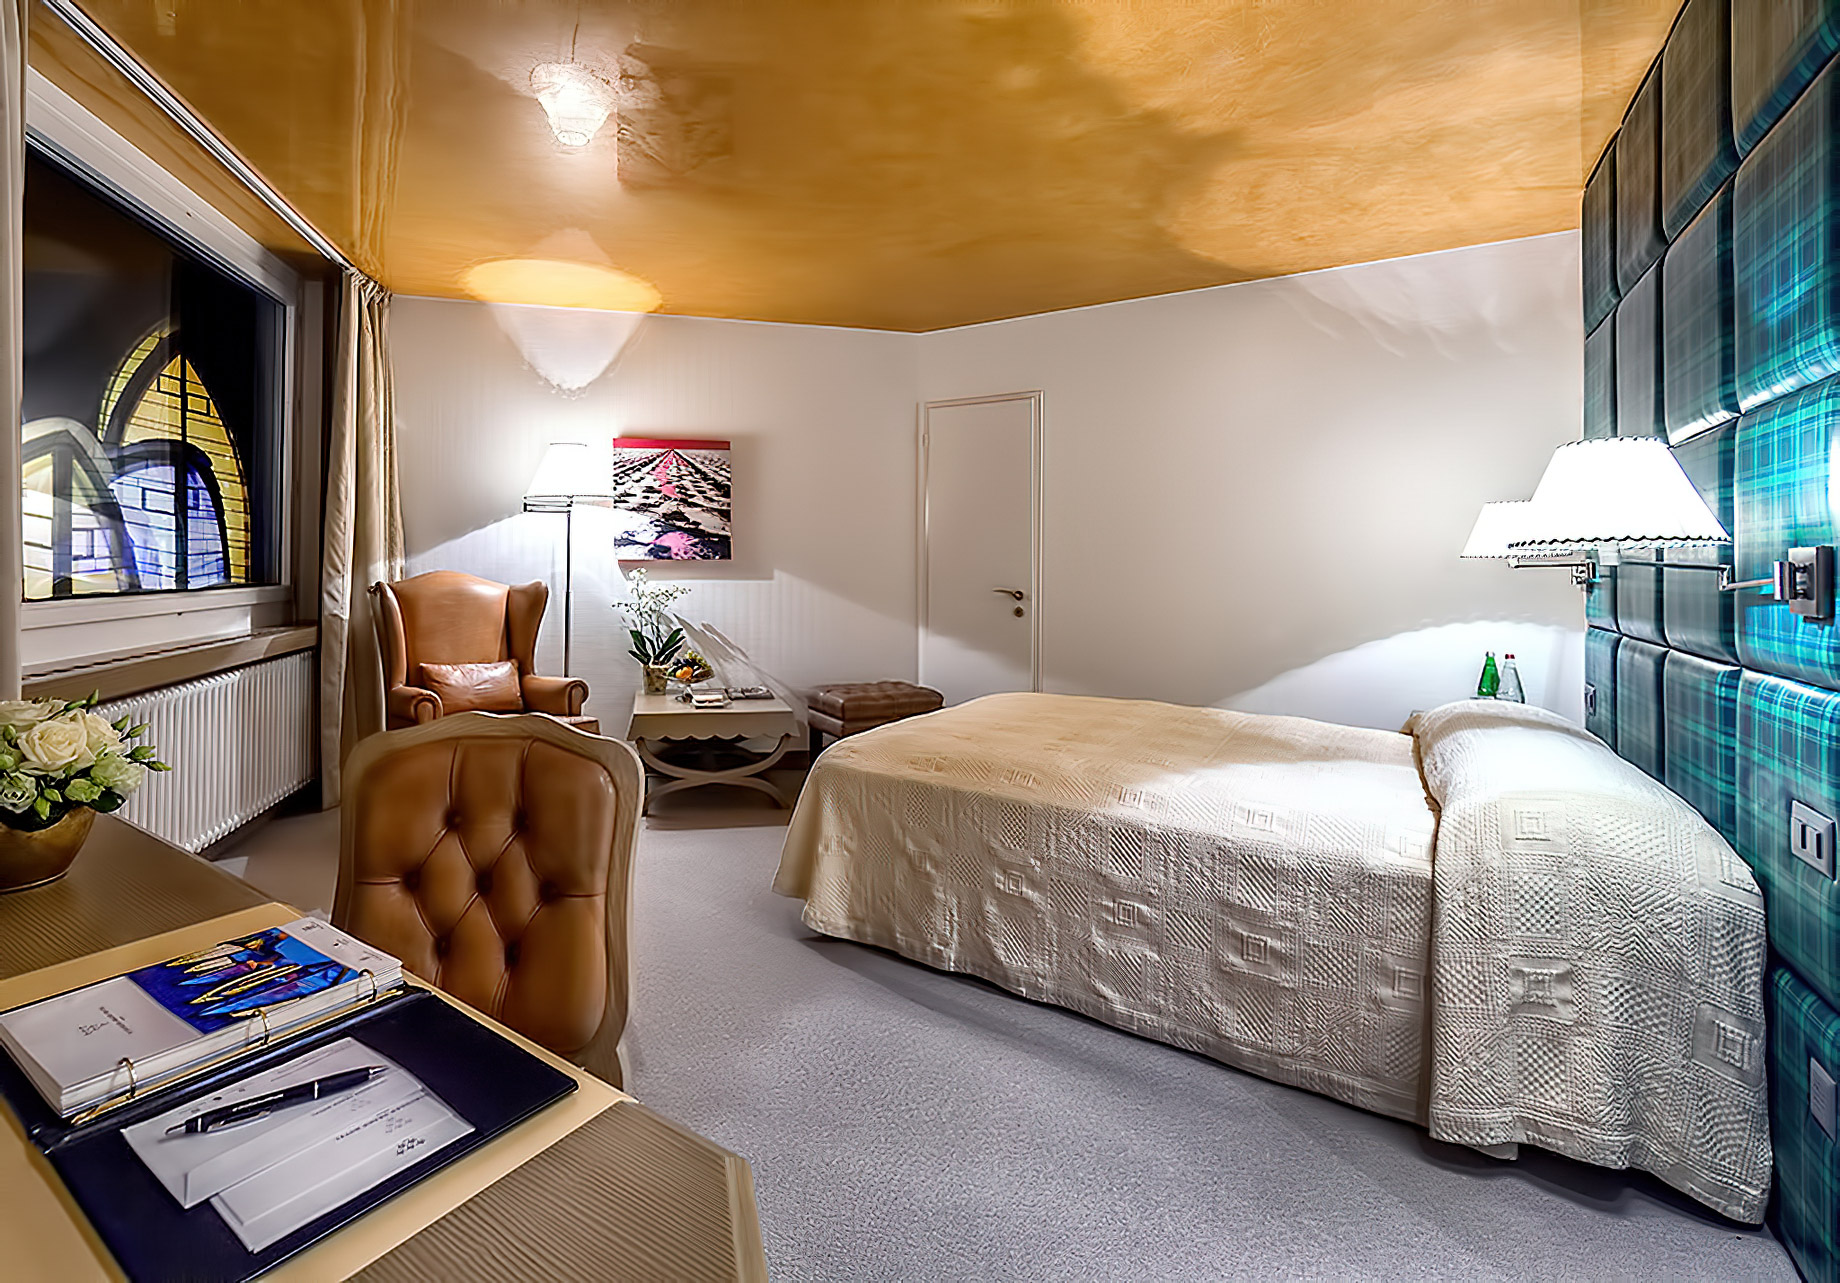 Tschuggen Grand Hotel – Arosa, Switzerland – Suite